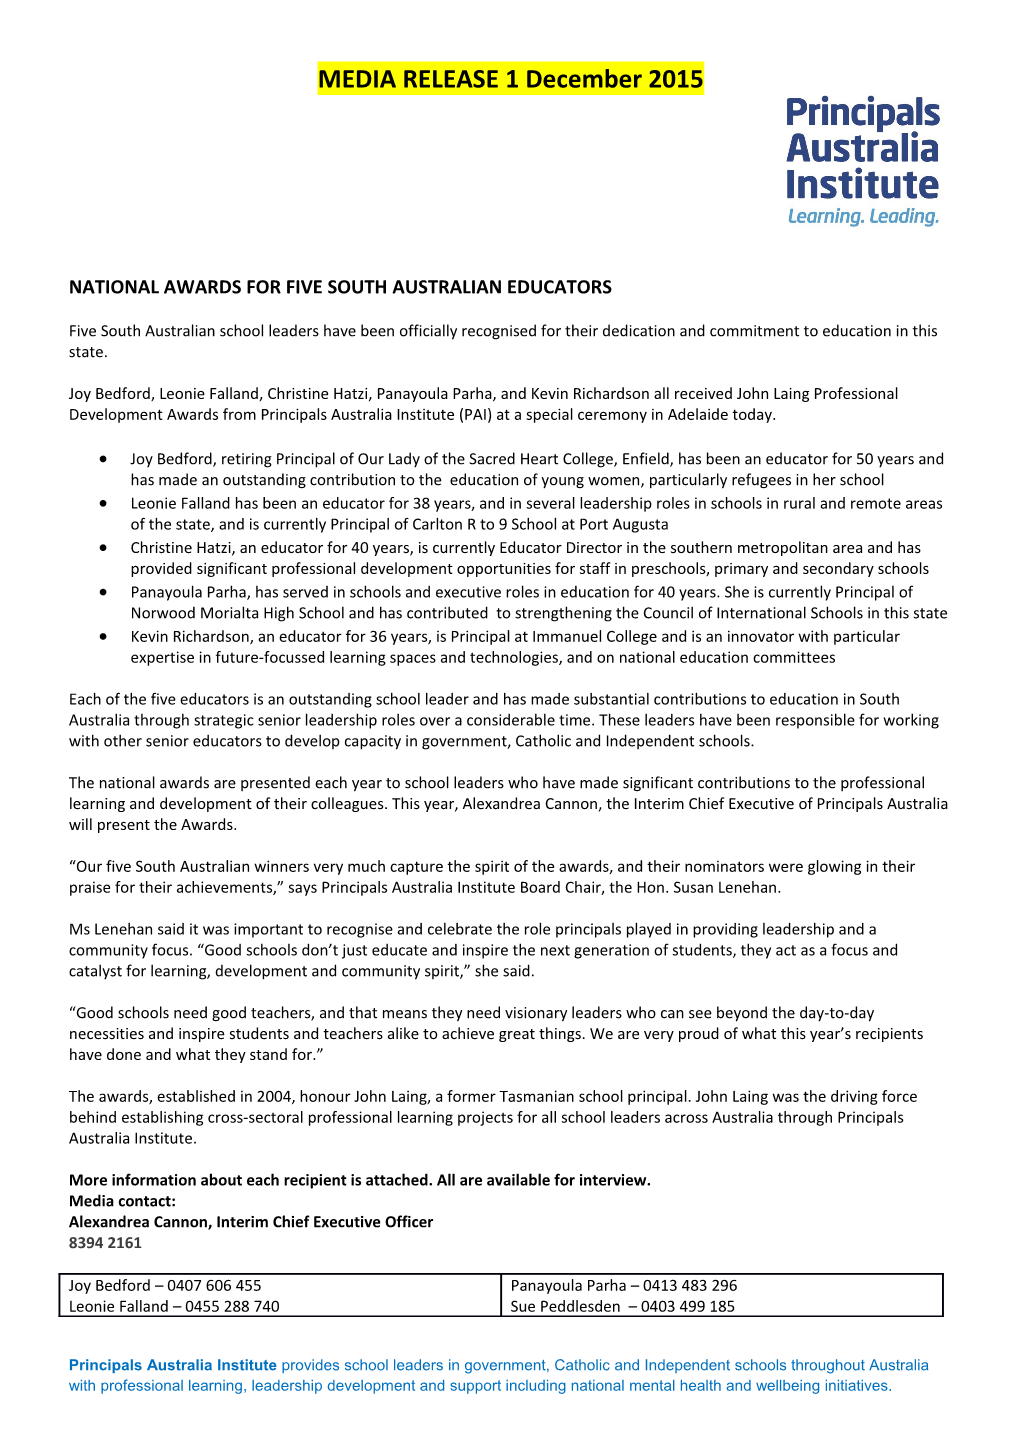 National Awards for Five South Australian Educators